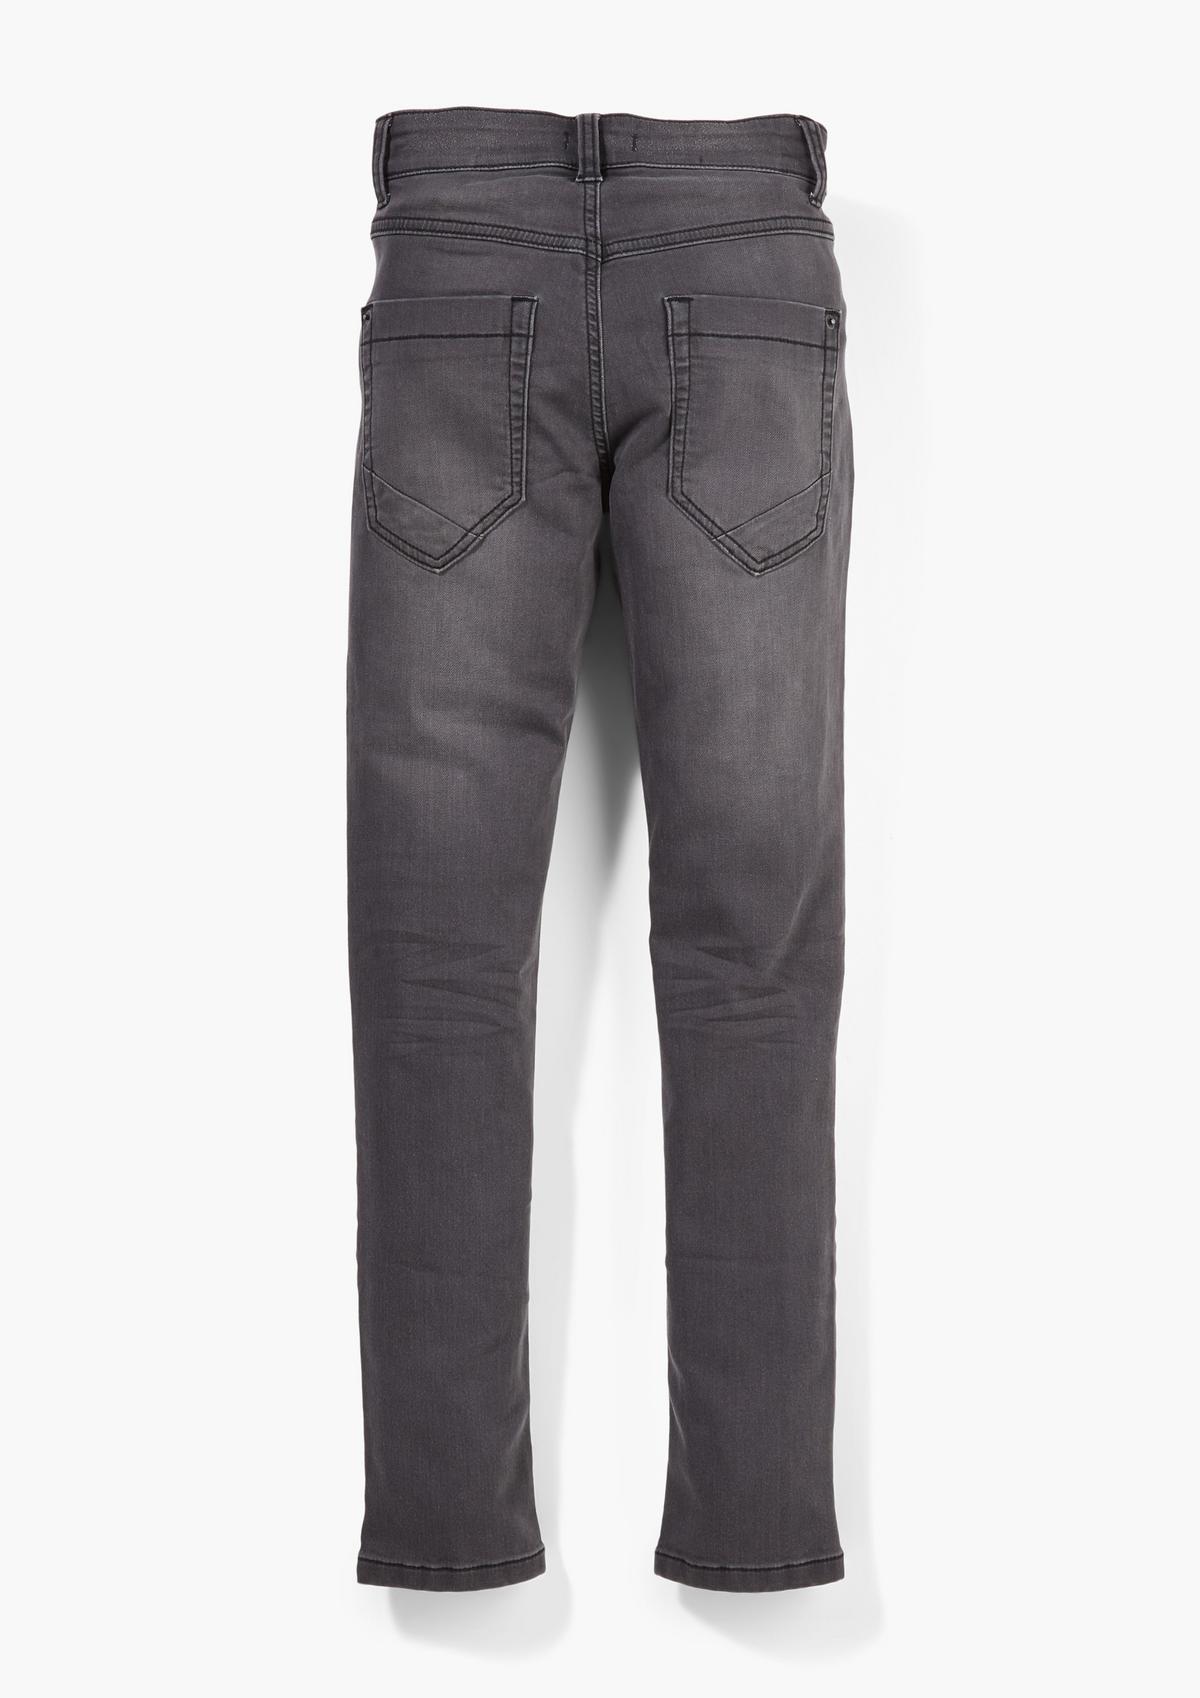 s.Oliver Skinny: super džíny se skinny nohavicemi